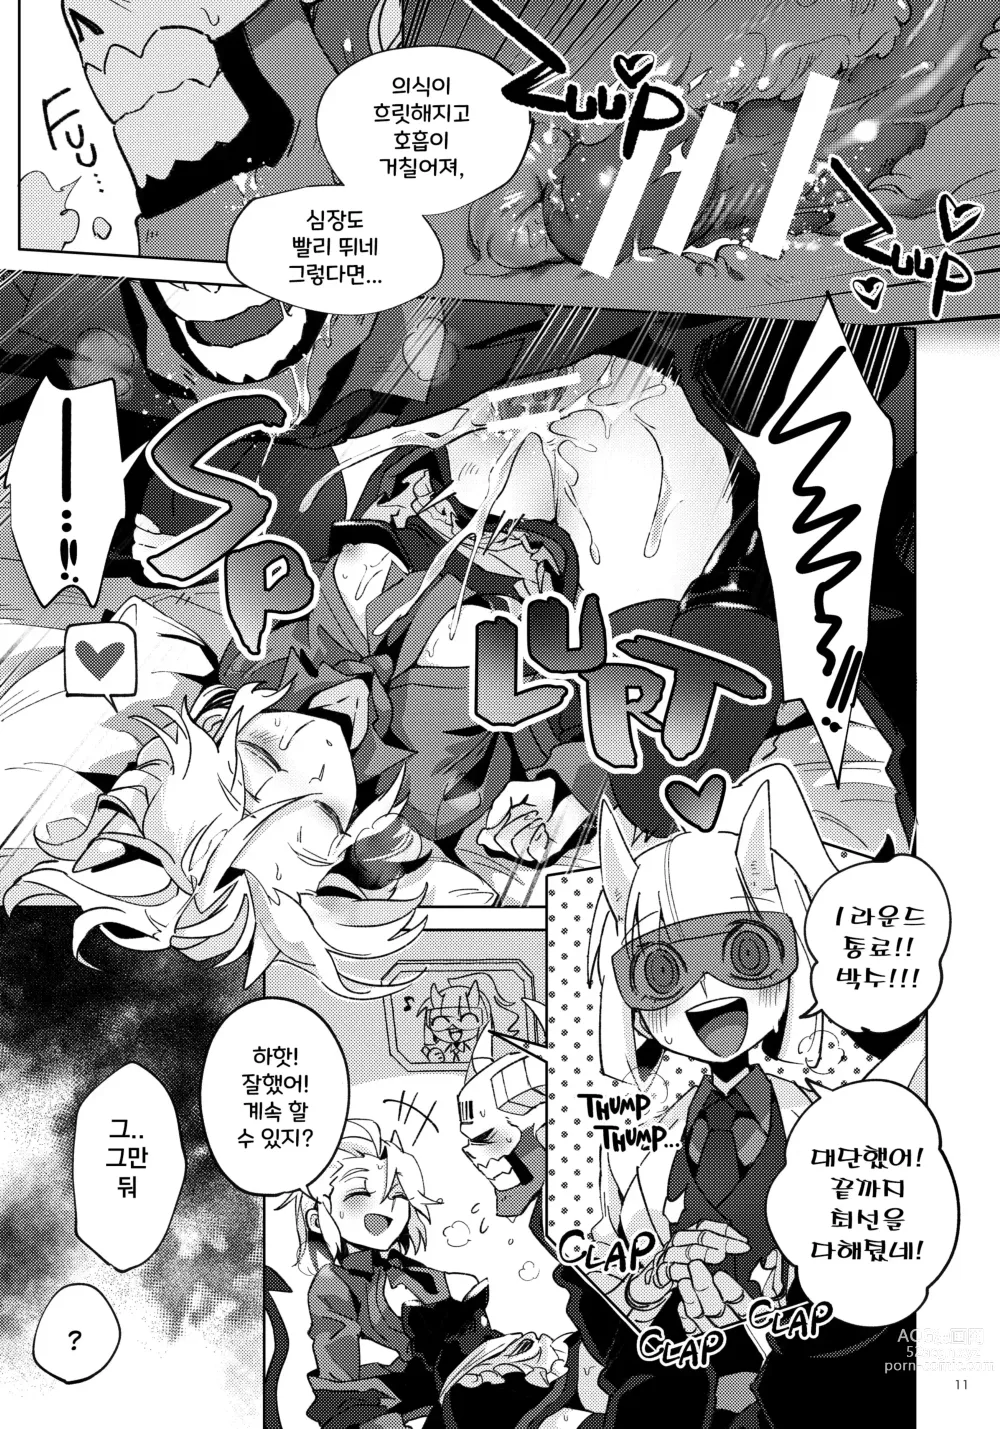 Page 10 of doujinshi Re: